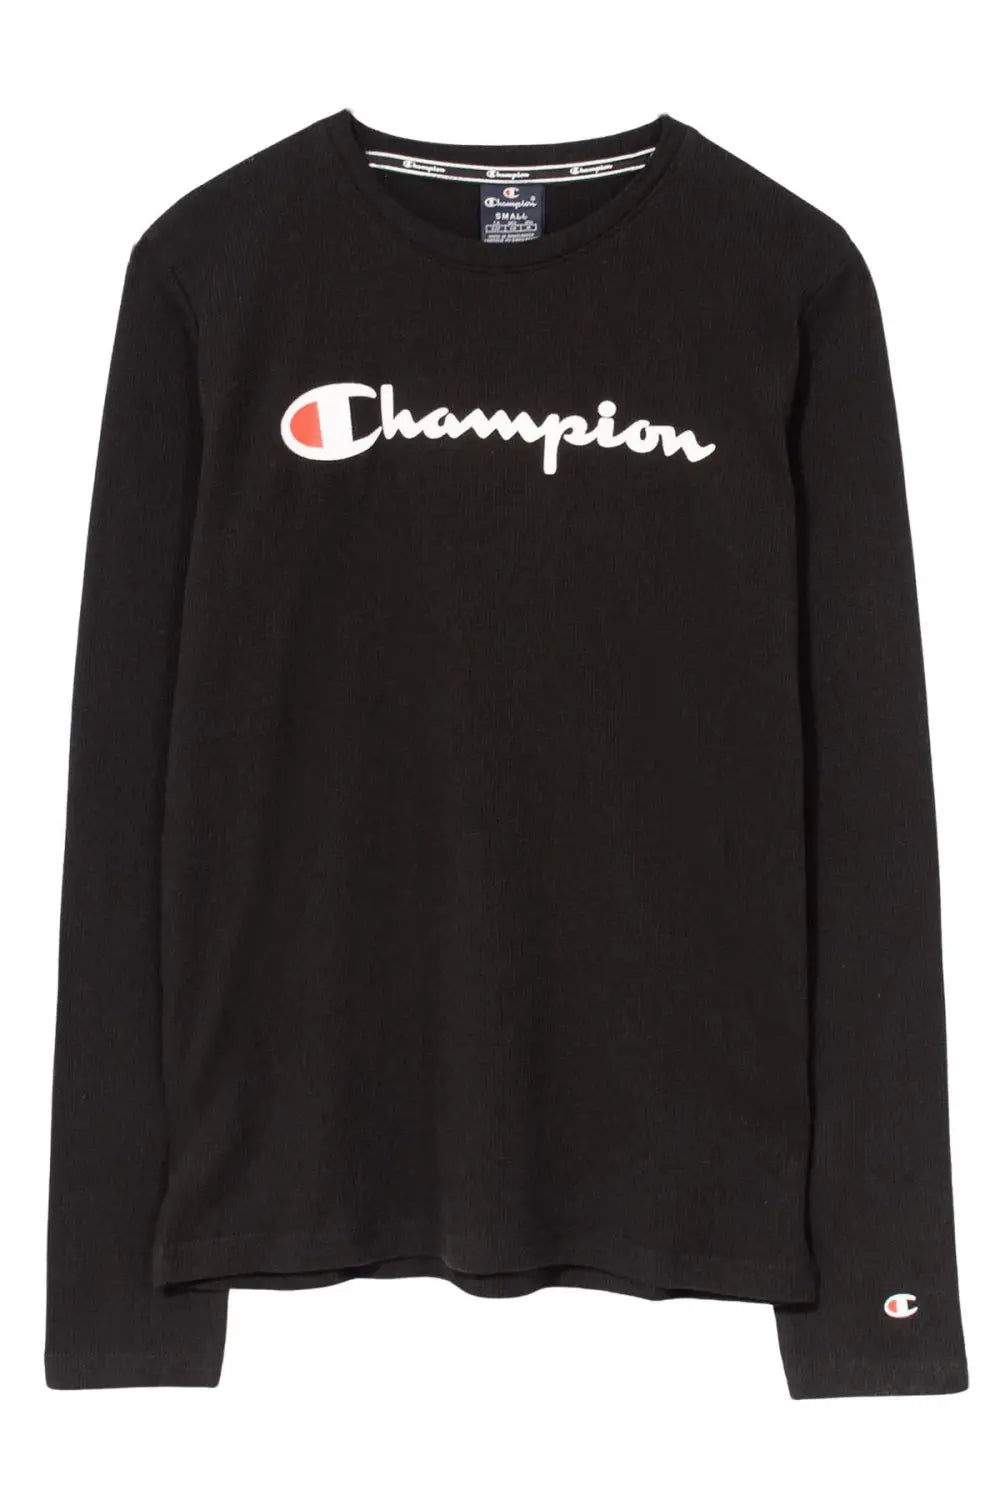 Champion Cotton Waffle Long Sleeve Top